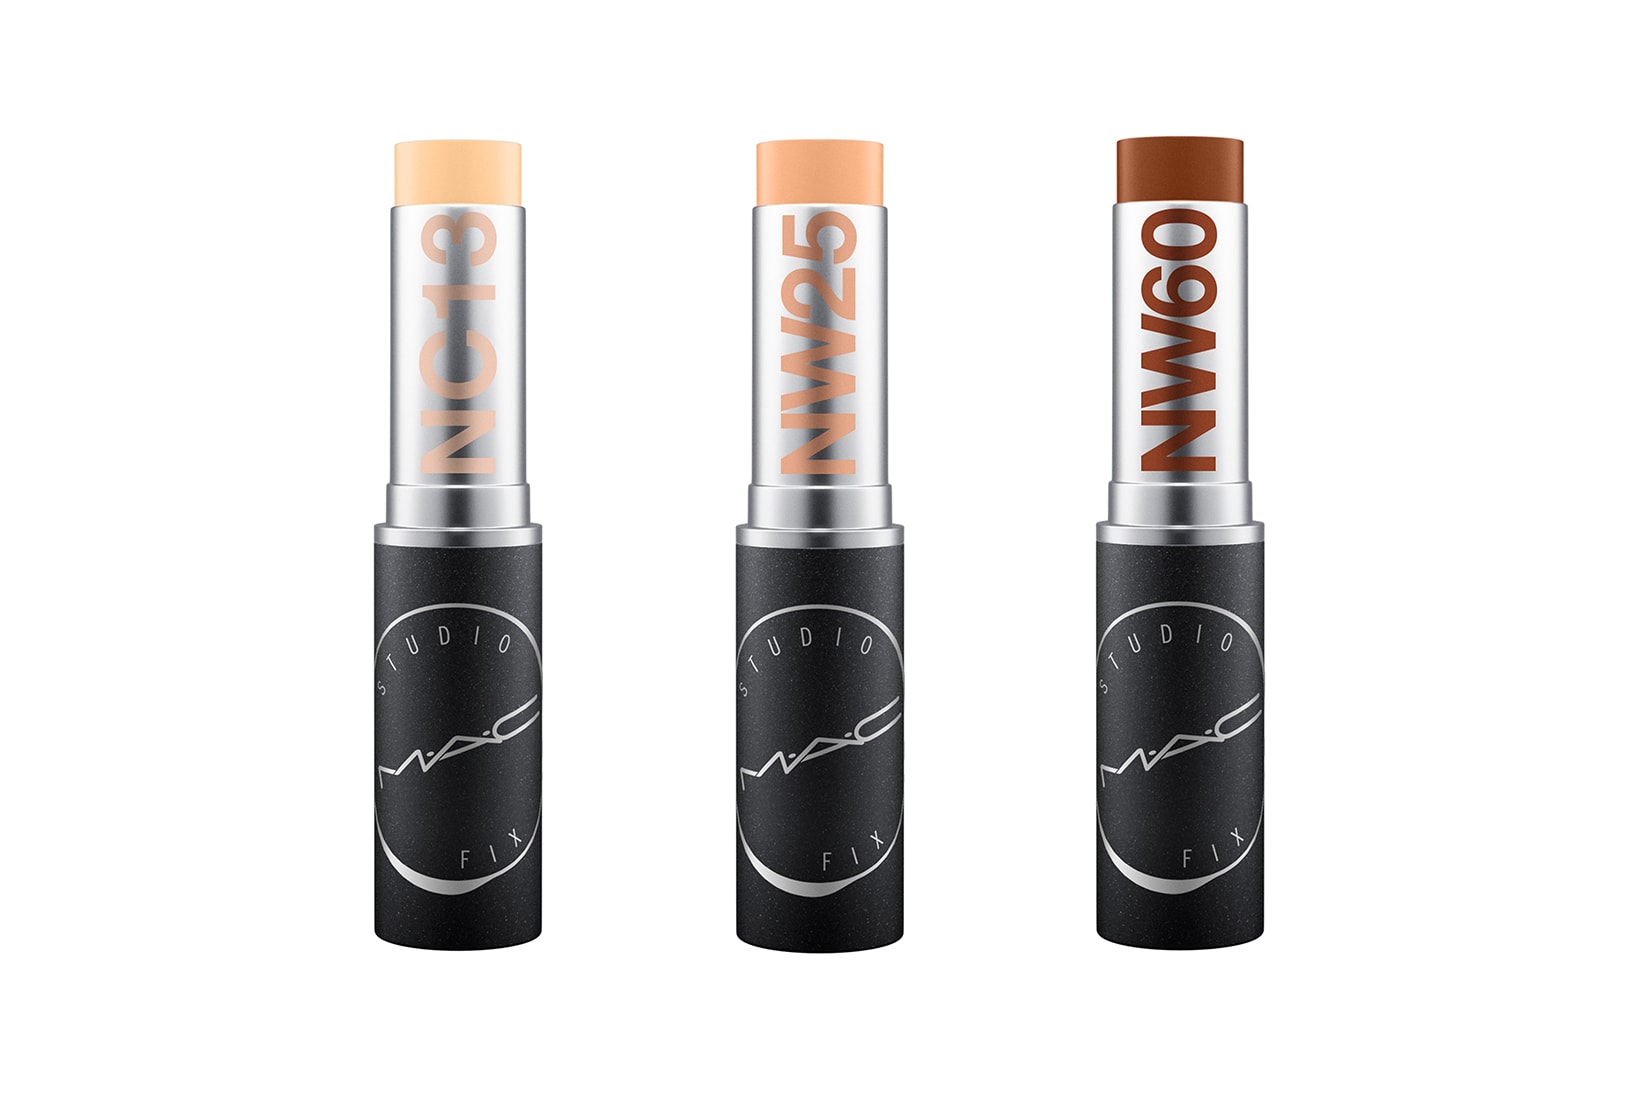 mac studio fix soft matte foundation stick makeup beauty skintone diverse shades powder plus foundation fluid SPF 15